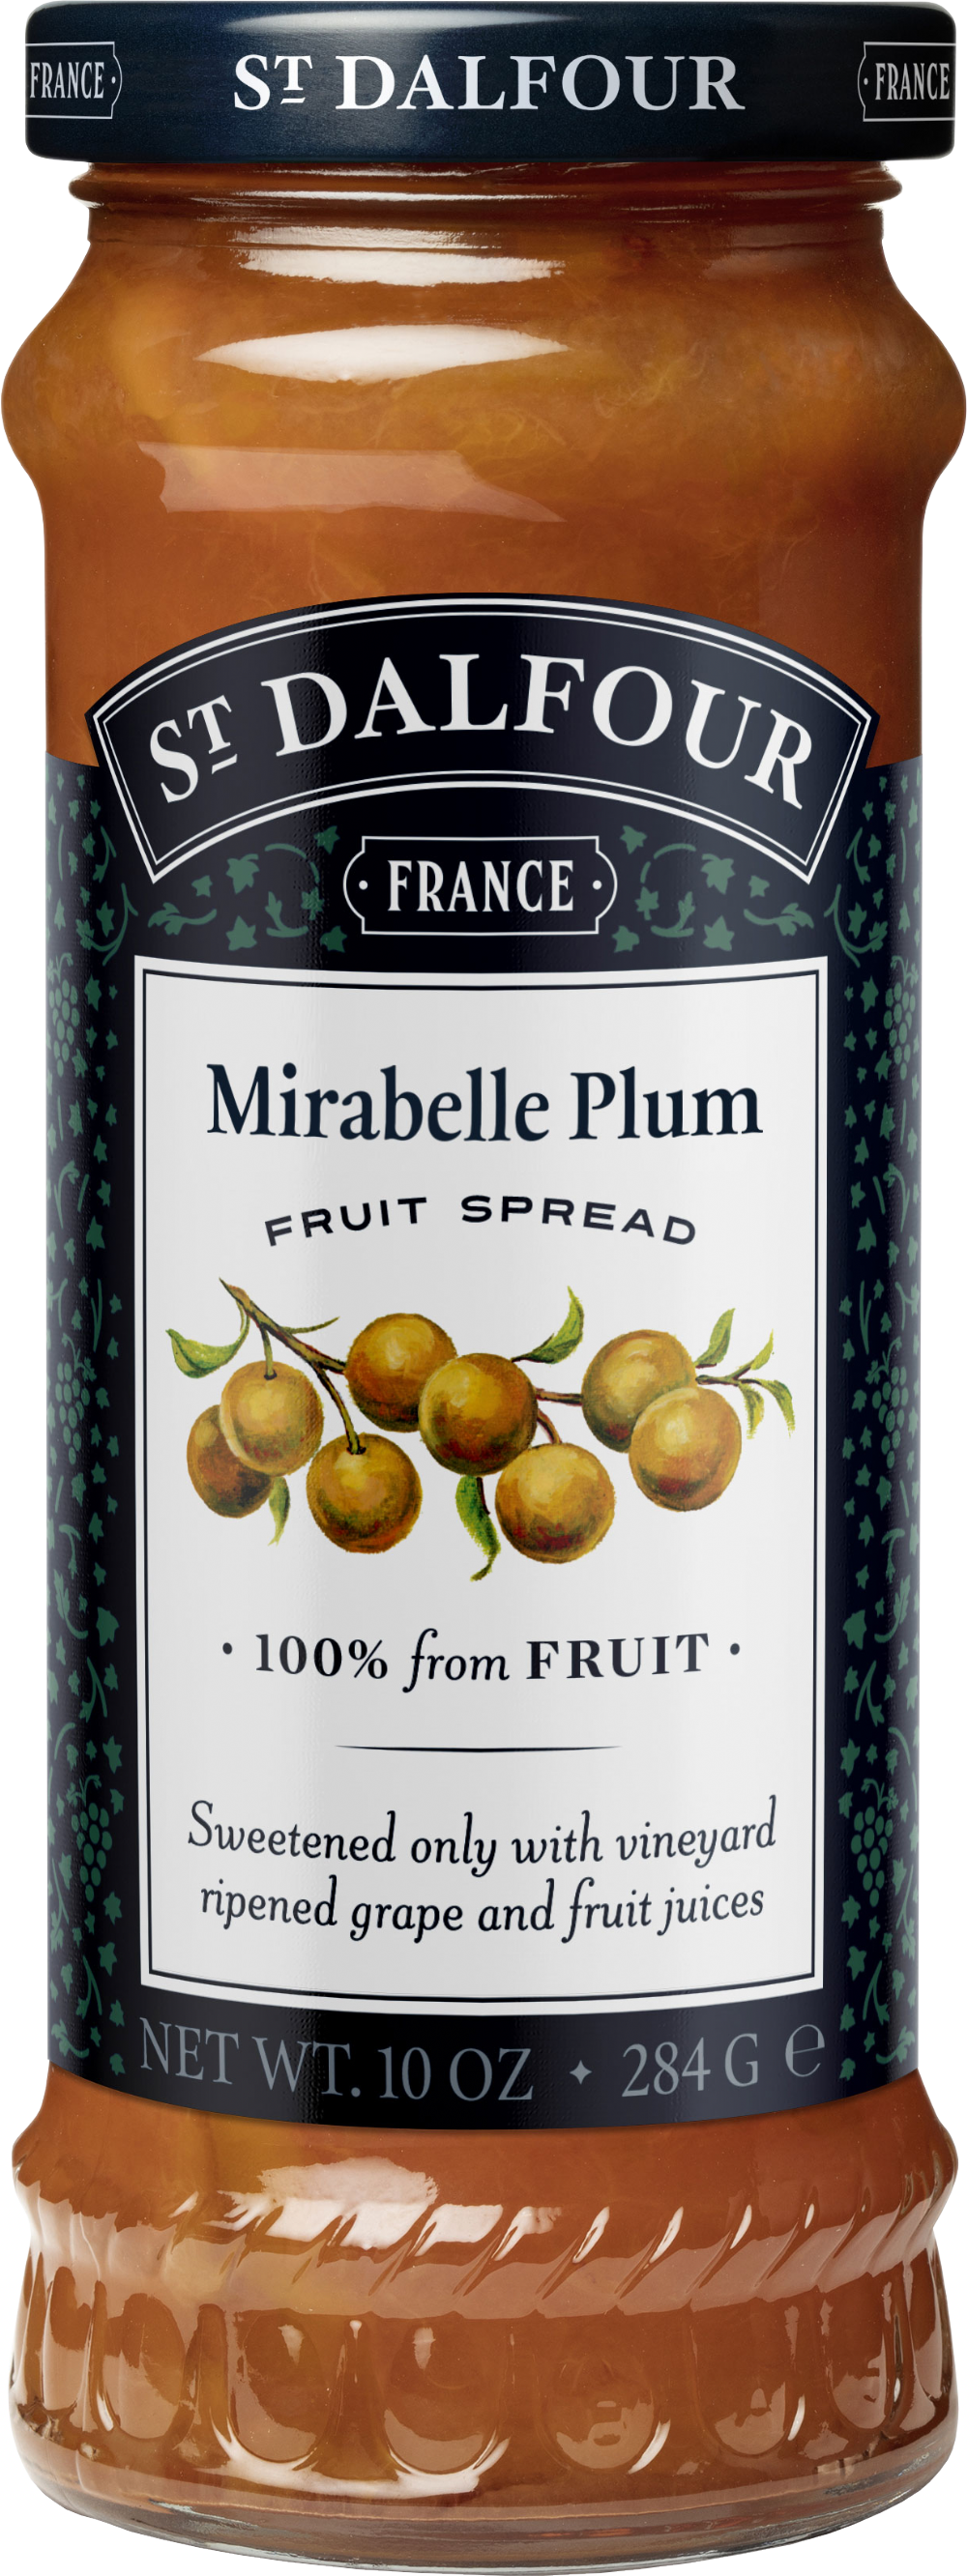 ST DALFOUR Mirabelle Plum Fruit Spread 284g